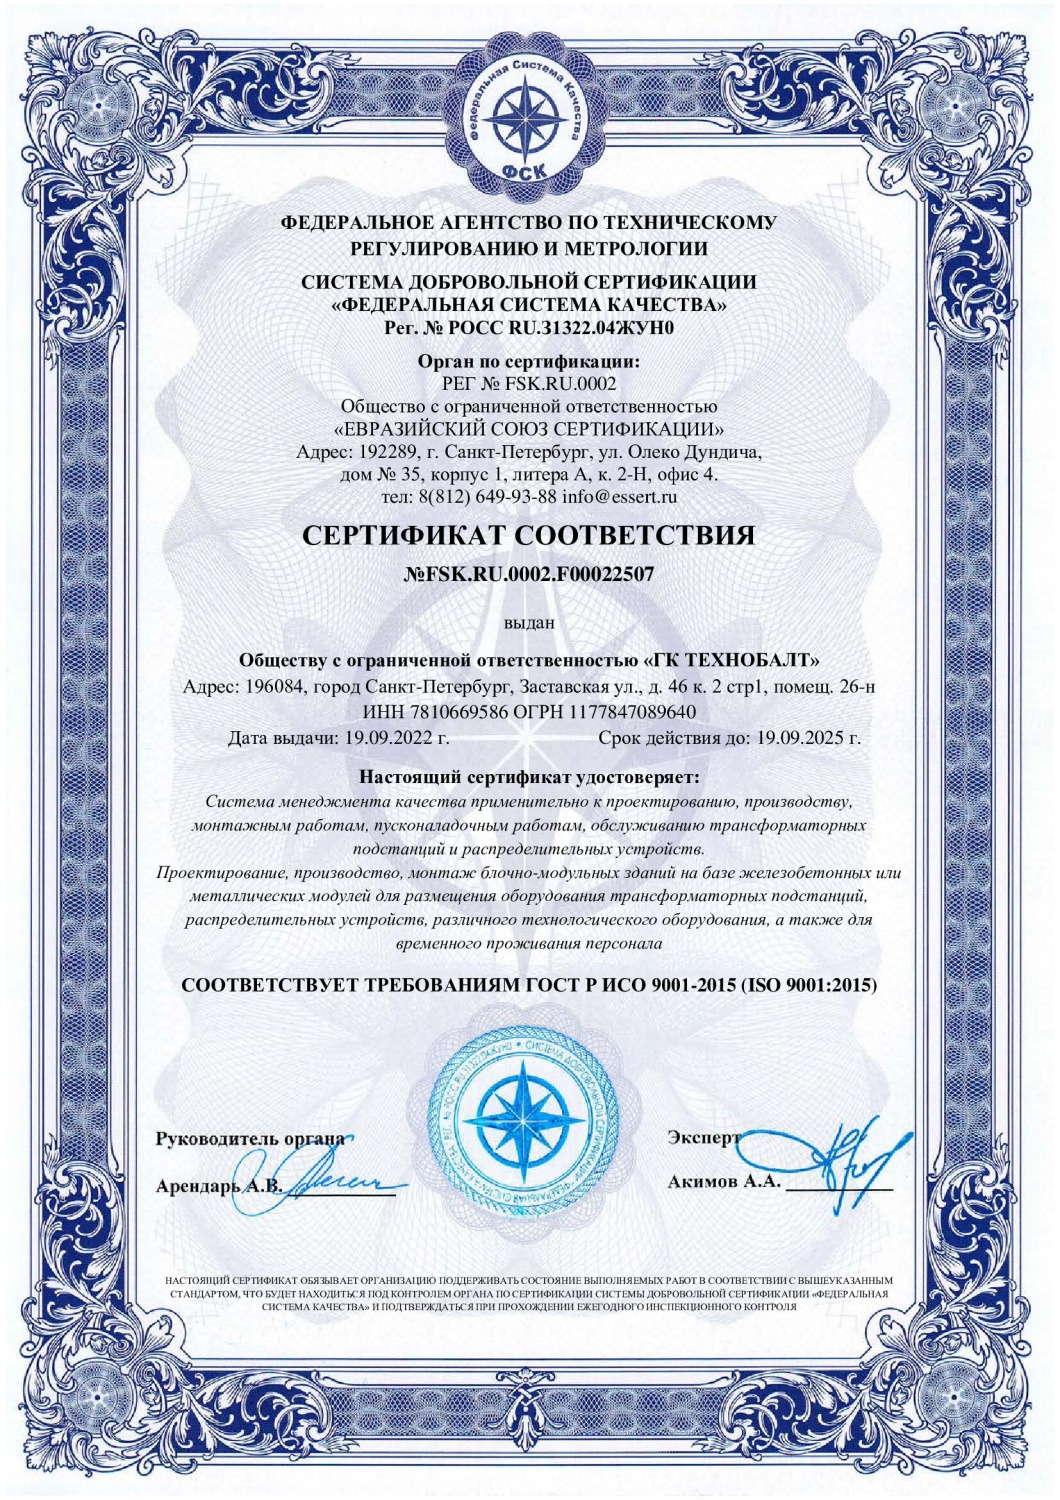 Сертификат соответствия ISO 9001:2015 ГК ТЕХНОБАЛТ